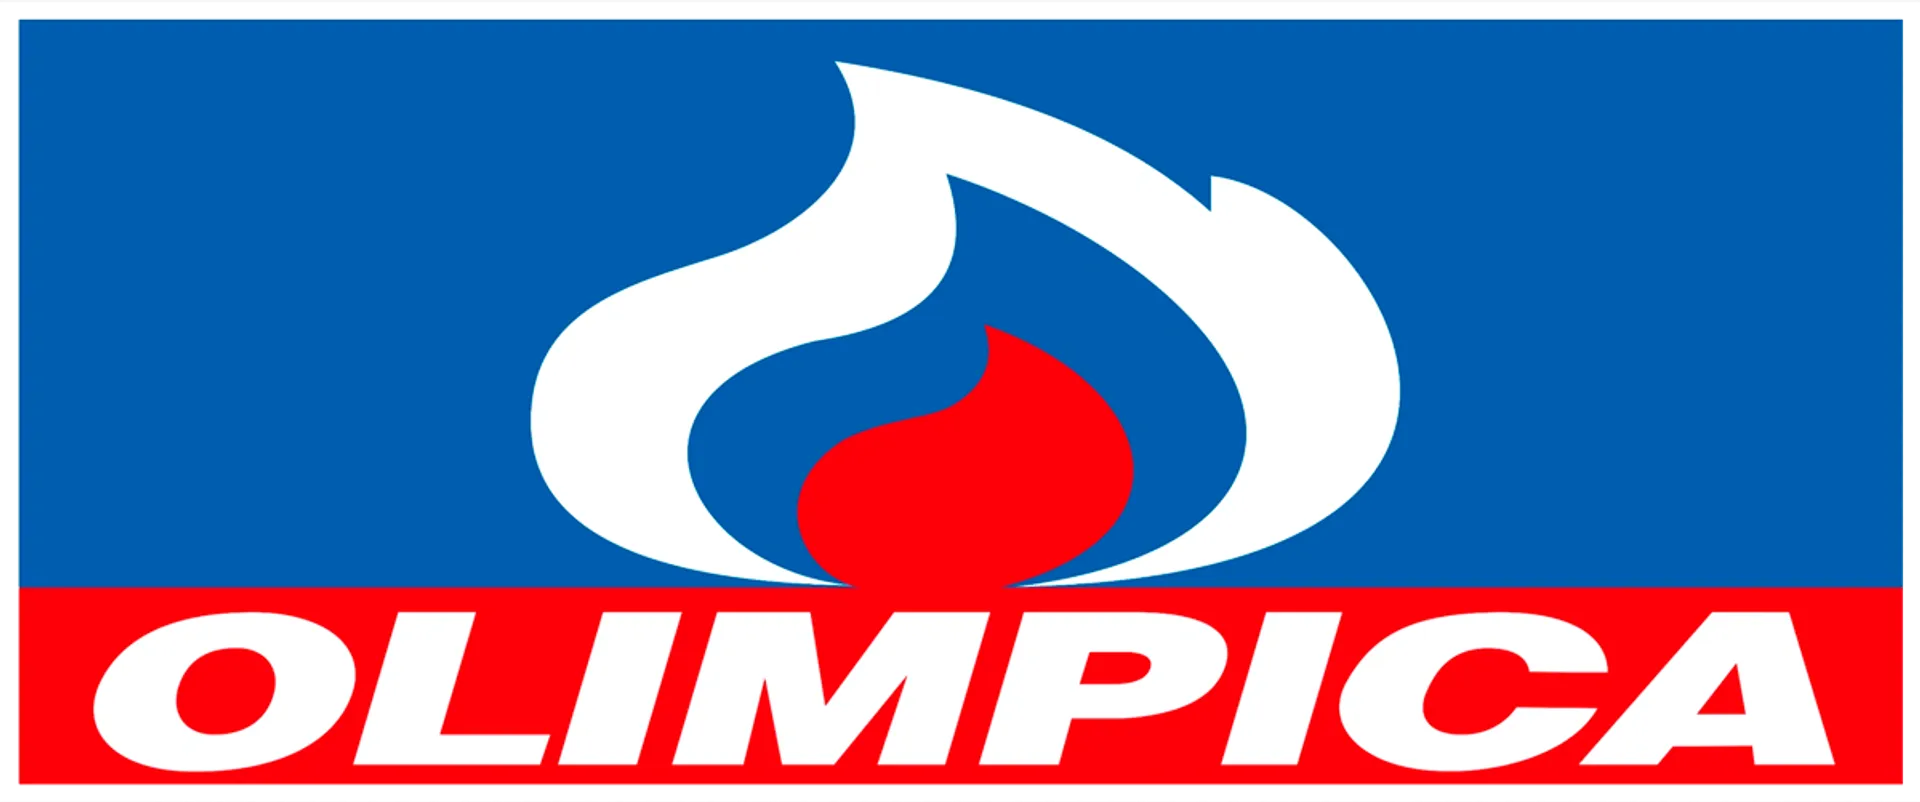 OLIMPICA logo